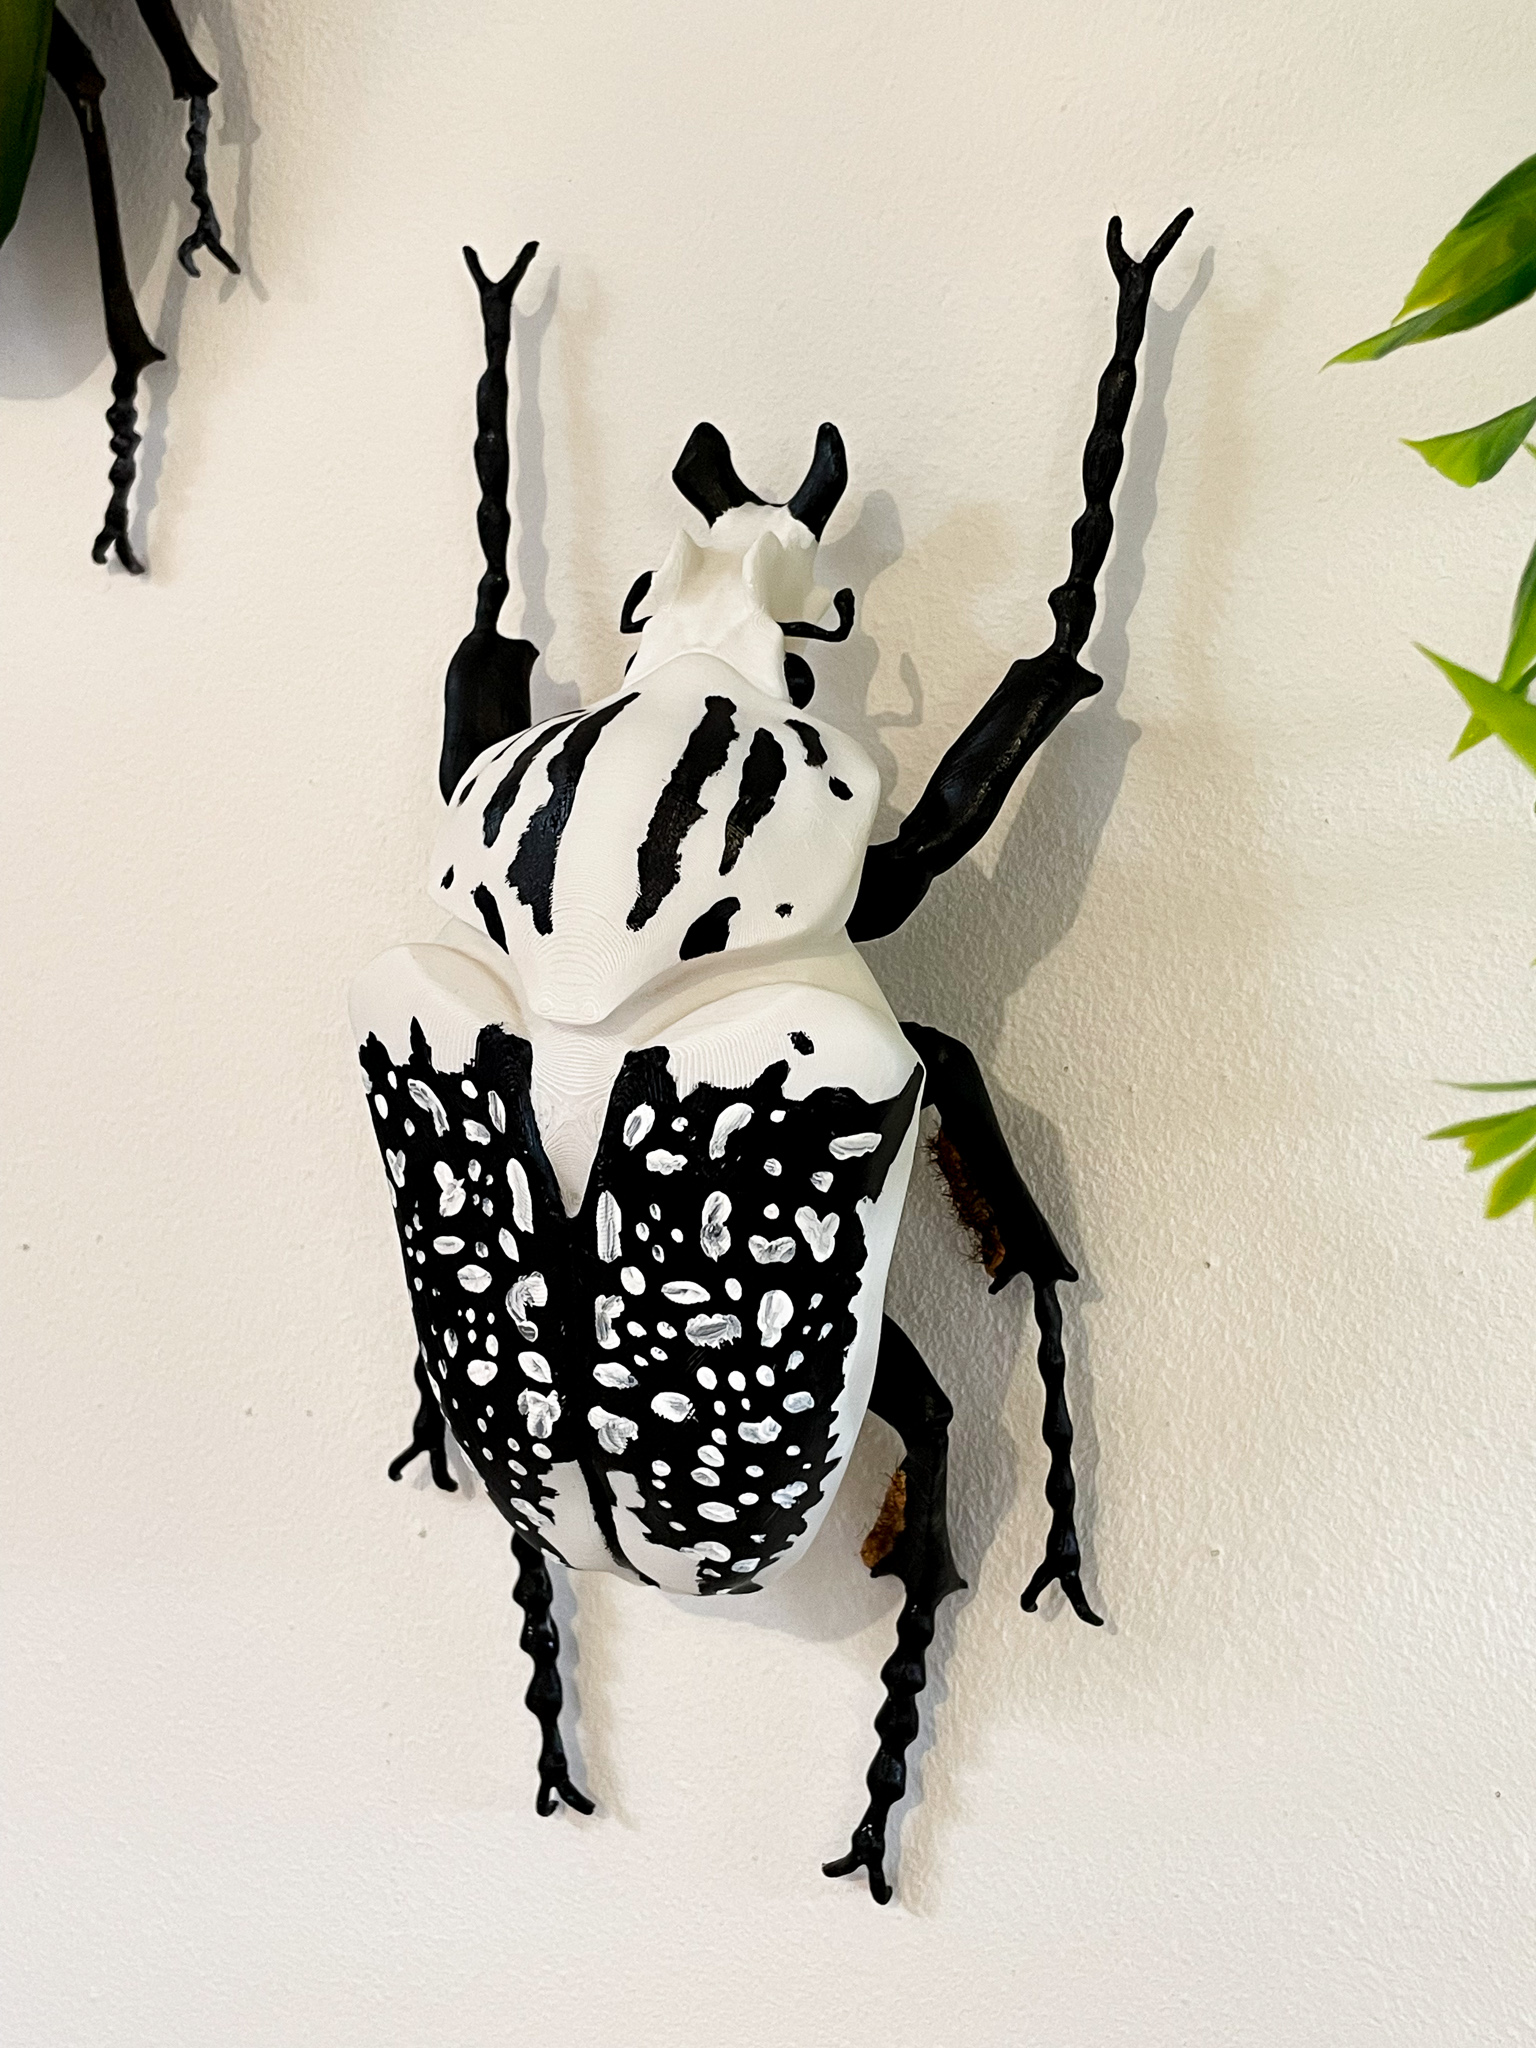 Coleoptere-decoration-educatif-insecte-goliath-2-maunakea